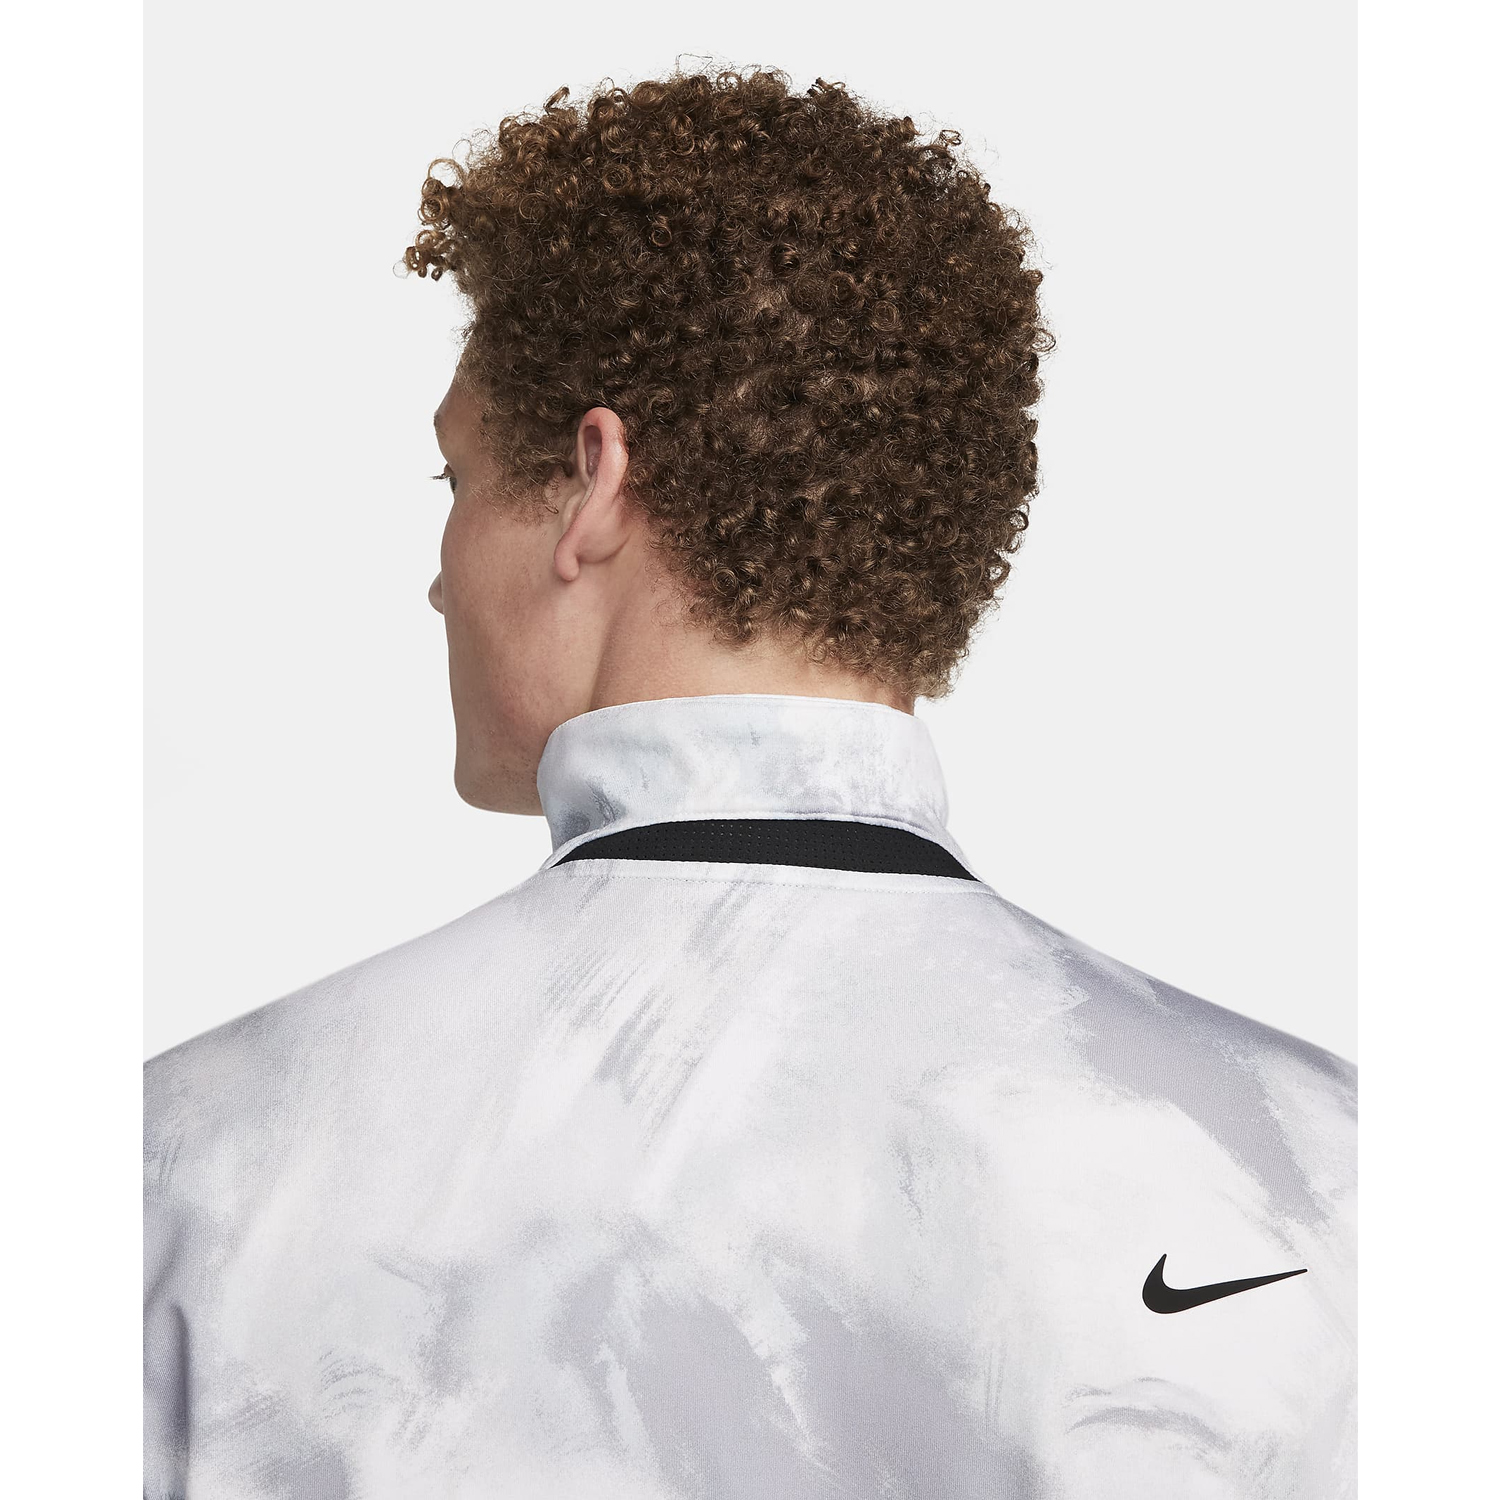 Nike Golf Dri-Fit Tour Ombre Polo Shirt 